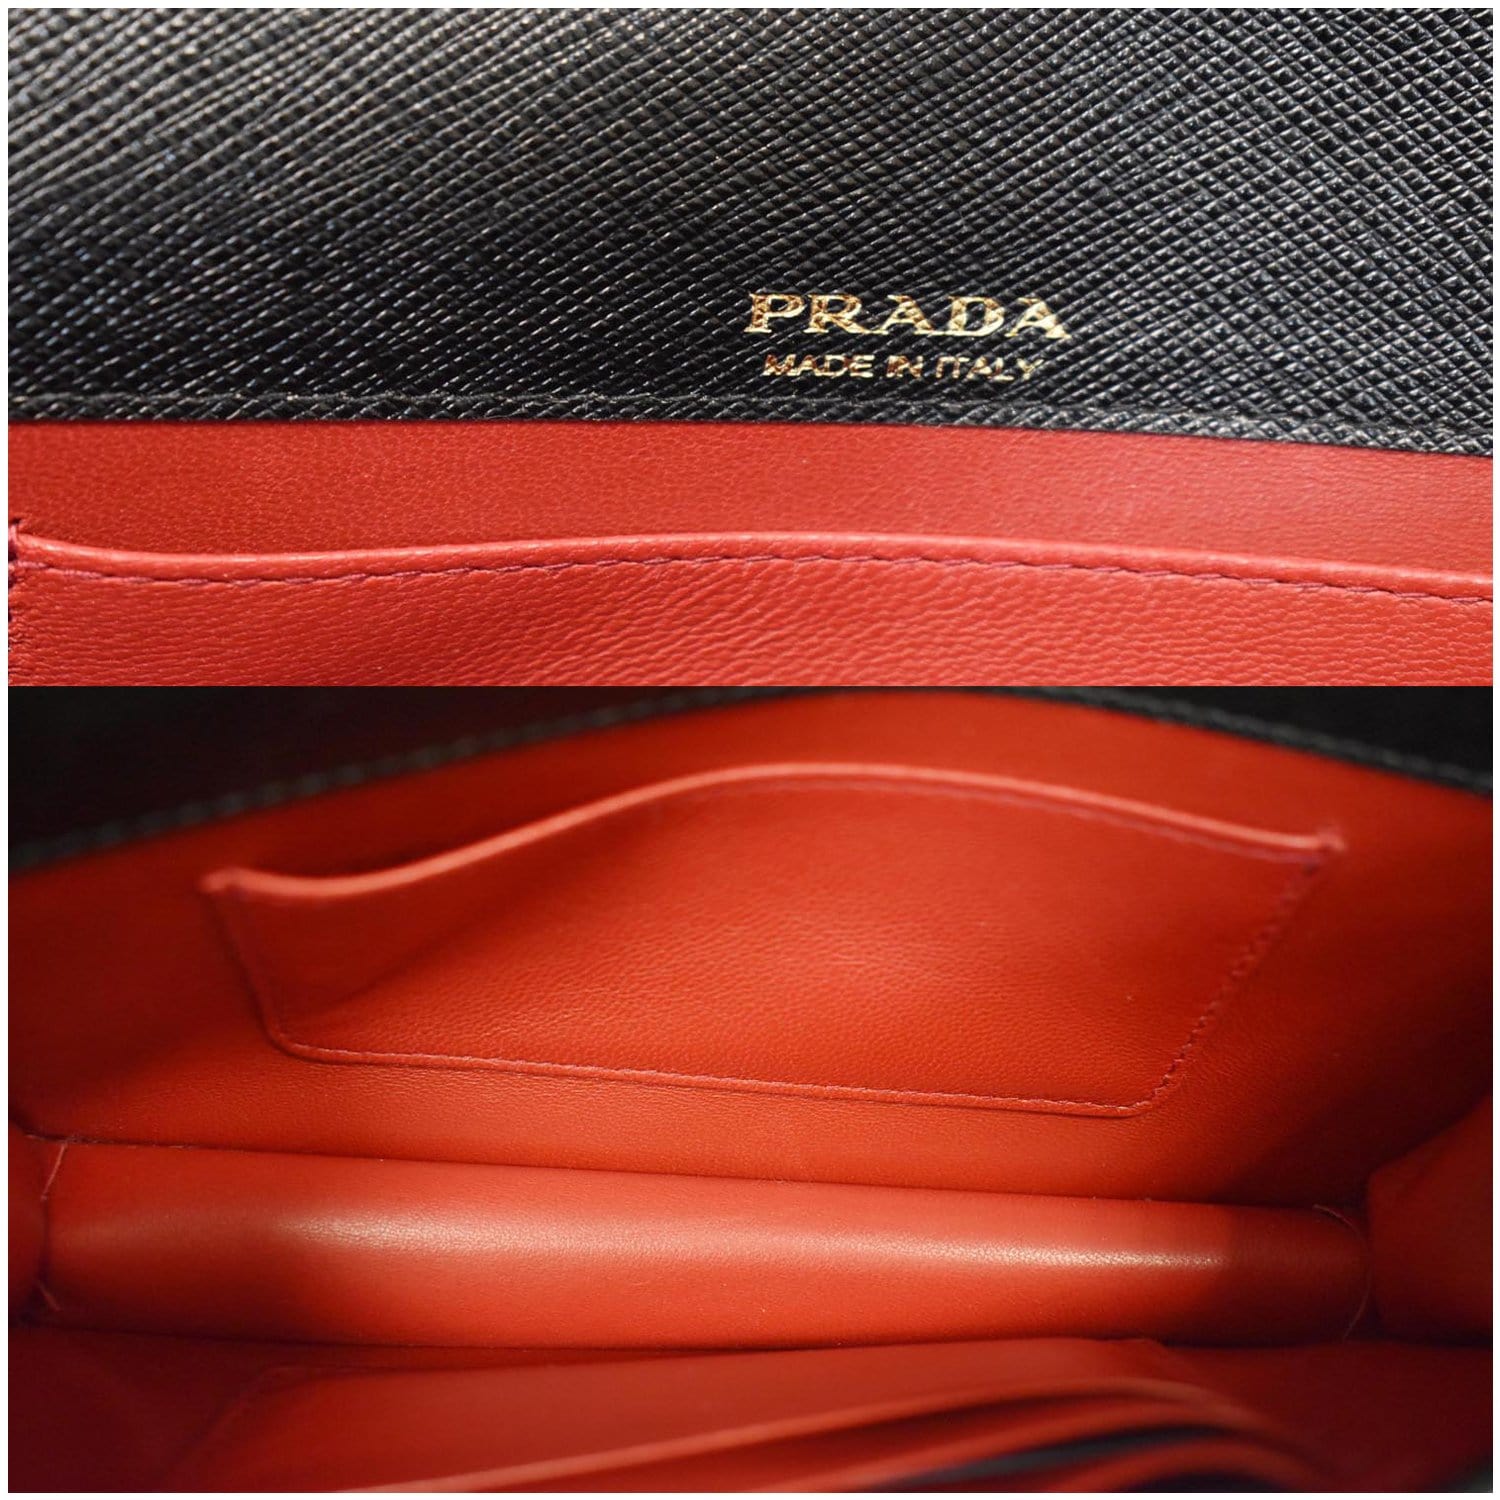 Prada Saffiano Leather Messenger Bag In Black